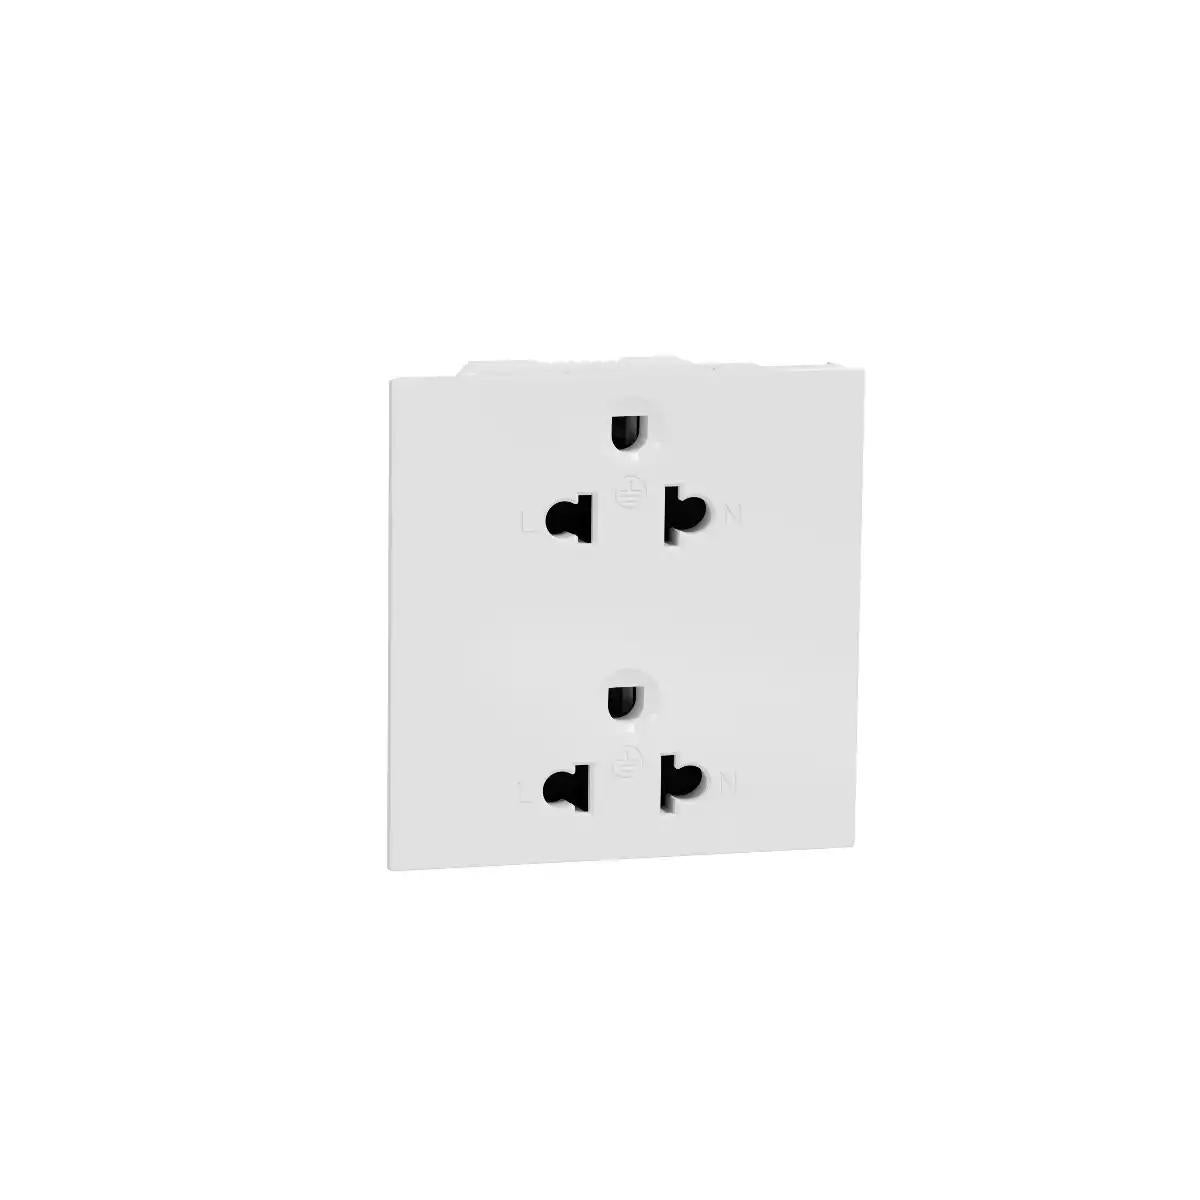 Socket-outlet, Avataron A, Universal, 16A, 250V, 3 Pin, 2G, E sized, White